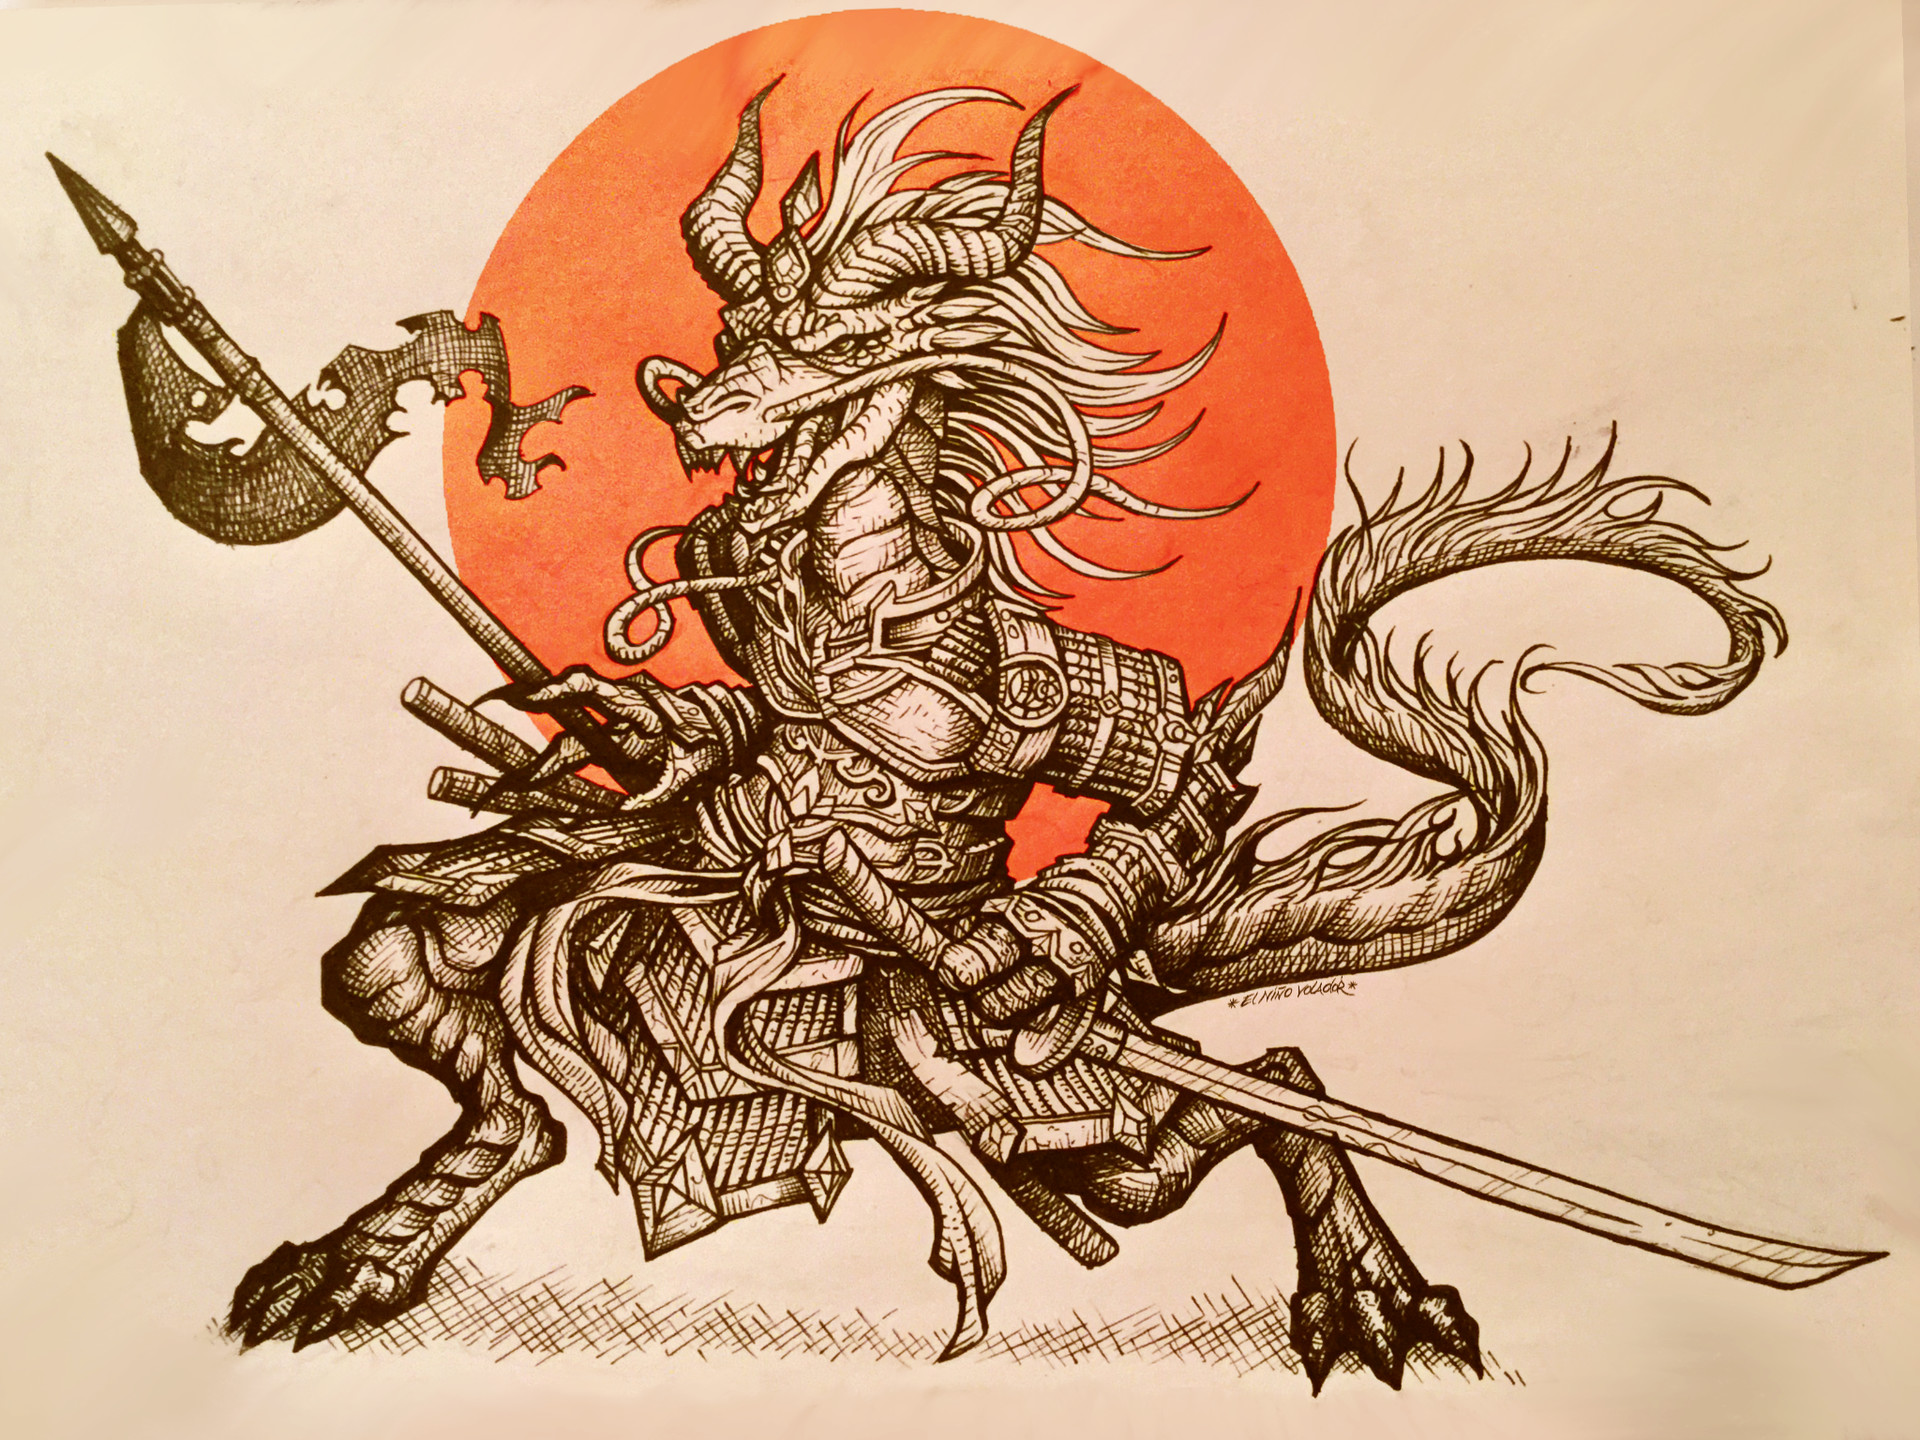 Samurai Vs Dragon Wallpapers